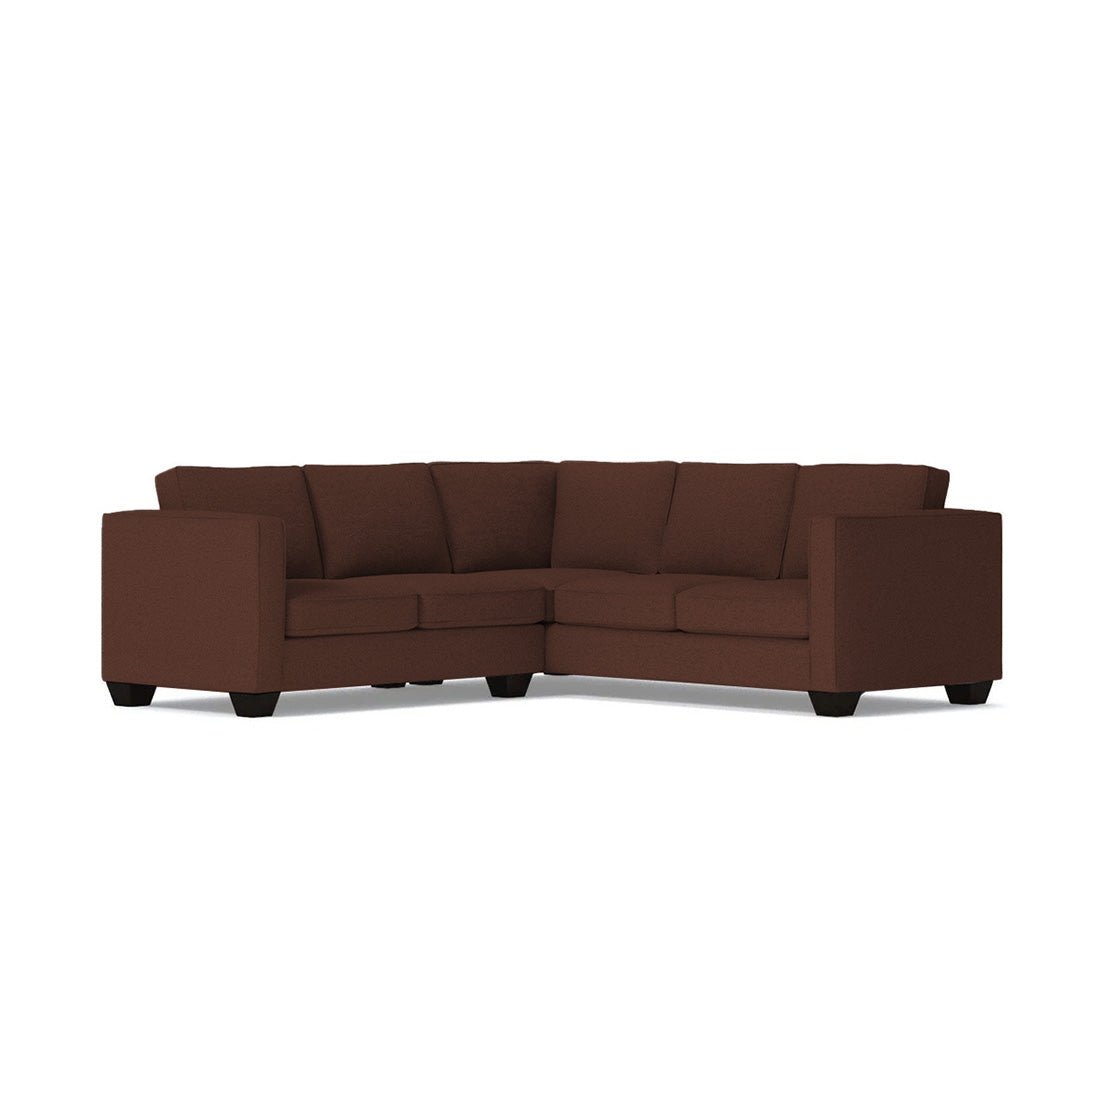 Torque India Richmond 5 Seater Corner Fabric Sofa For Living Room - TorqueIndia